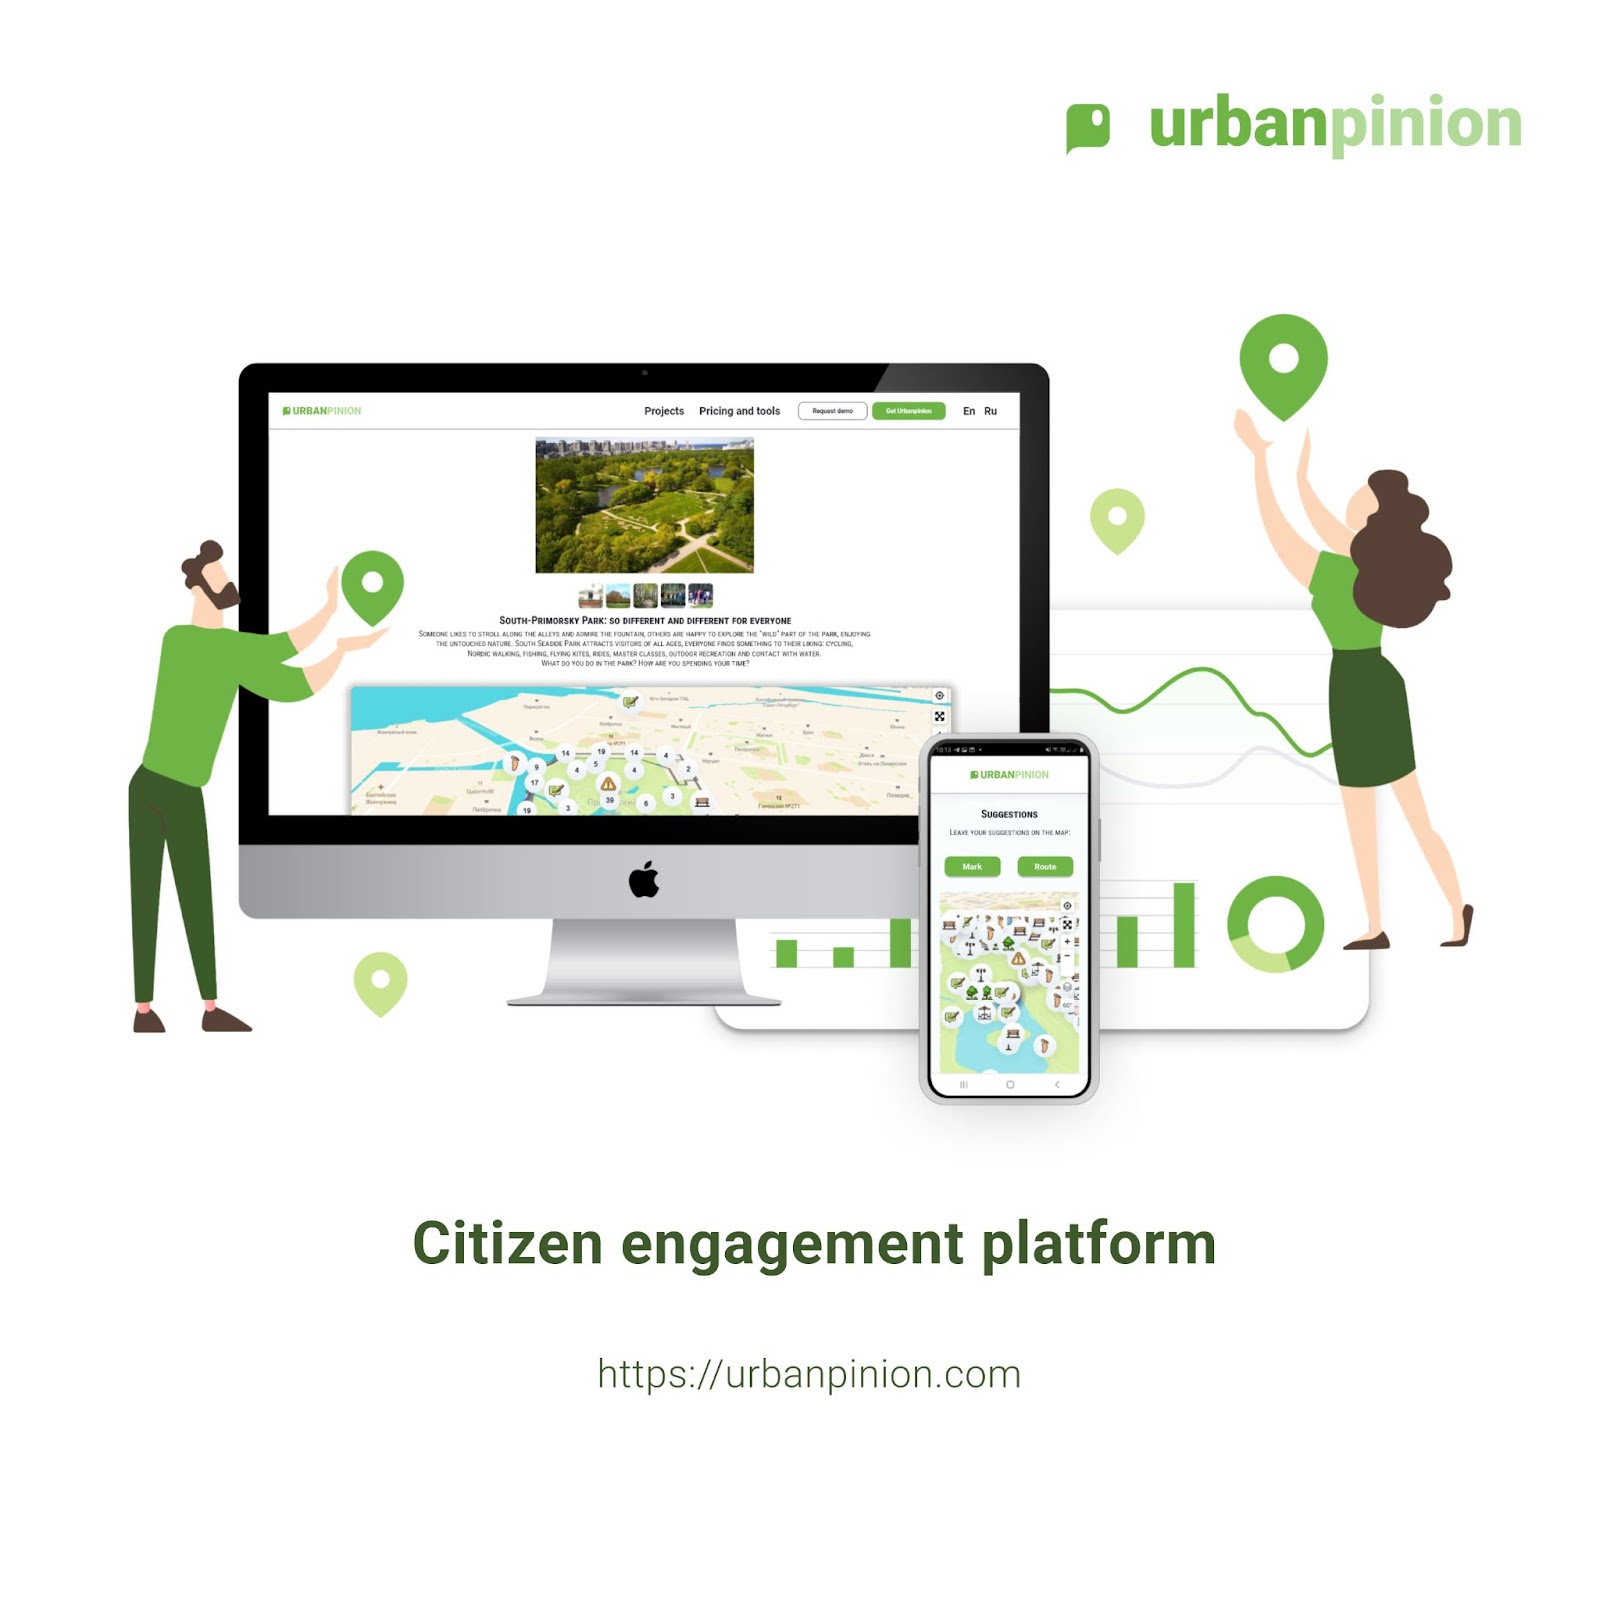 Urbanpinion - new tool for citizen engagement | Planetizen Events Board